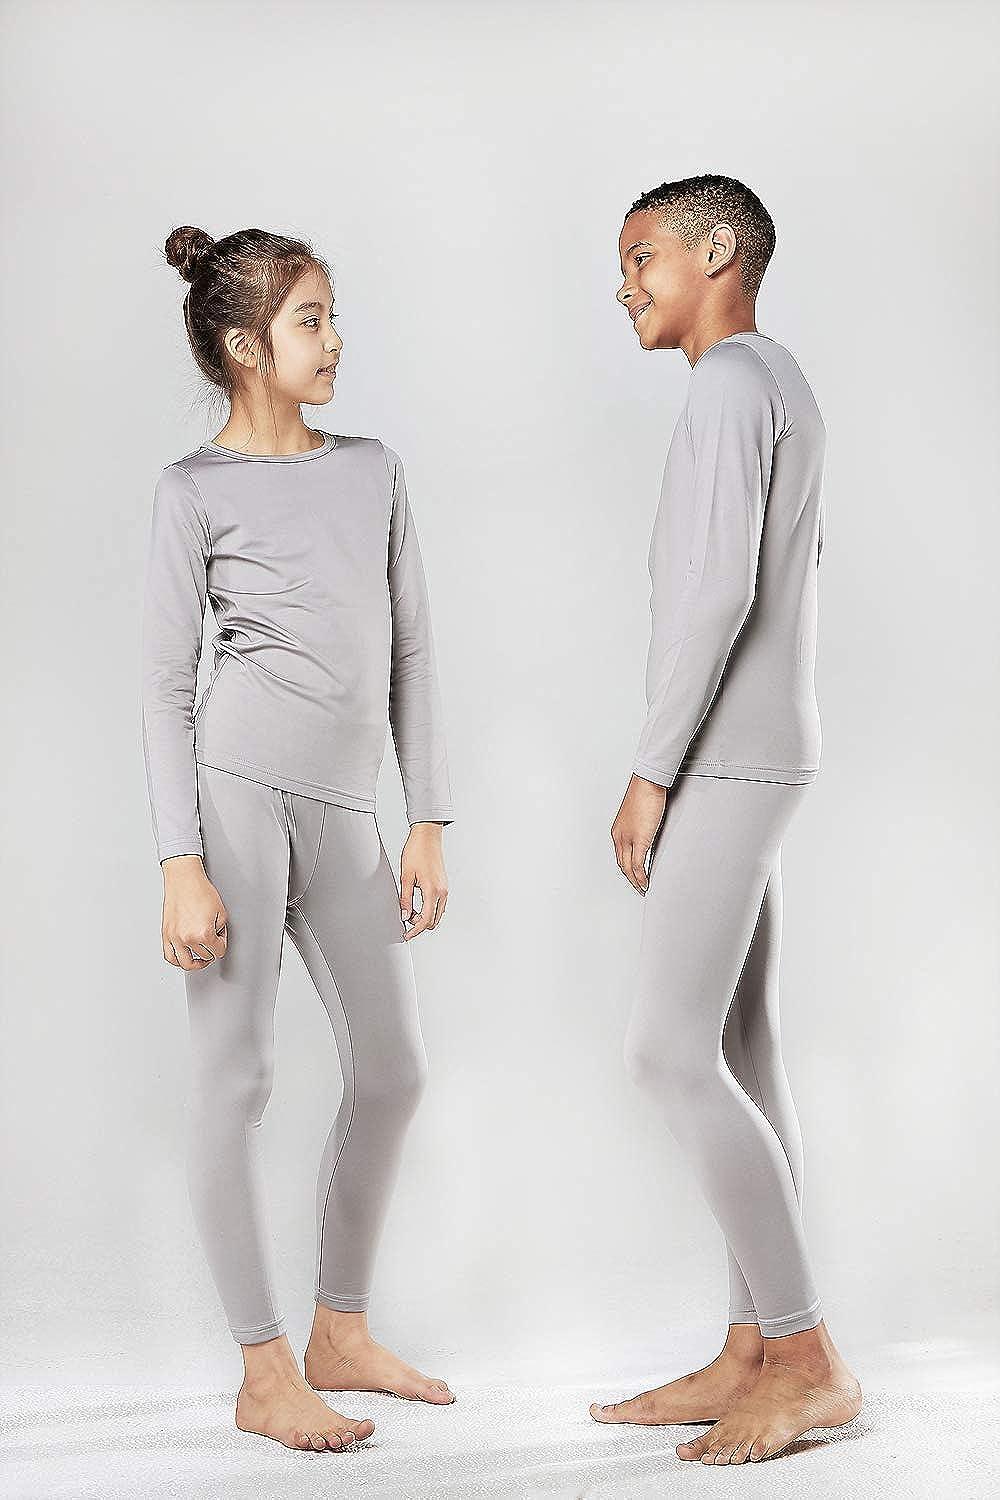 DEVOPS Boys and Girls Thermal Underwear Long Johns Set with Fleece